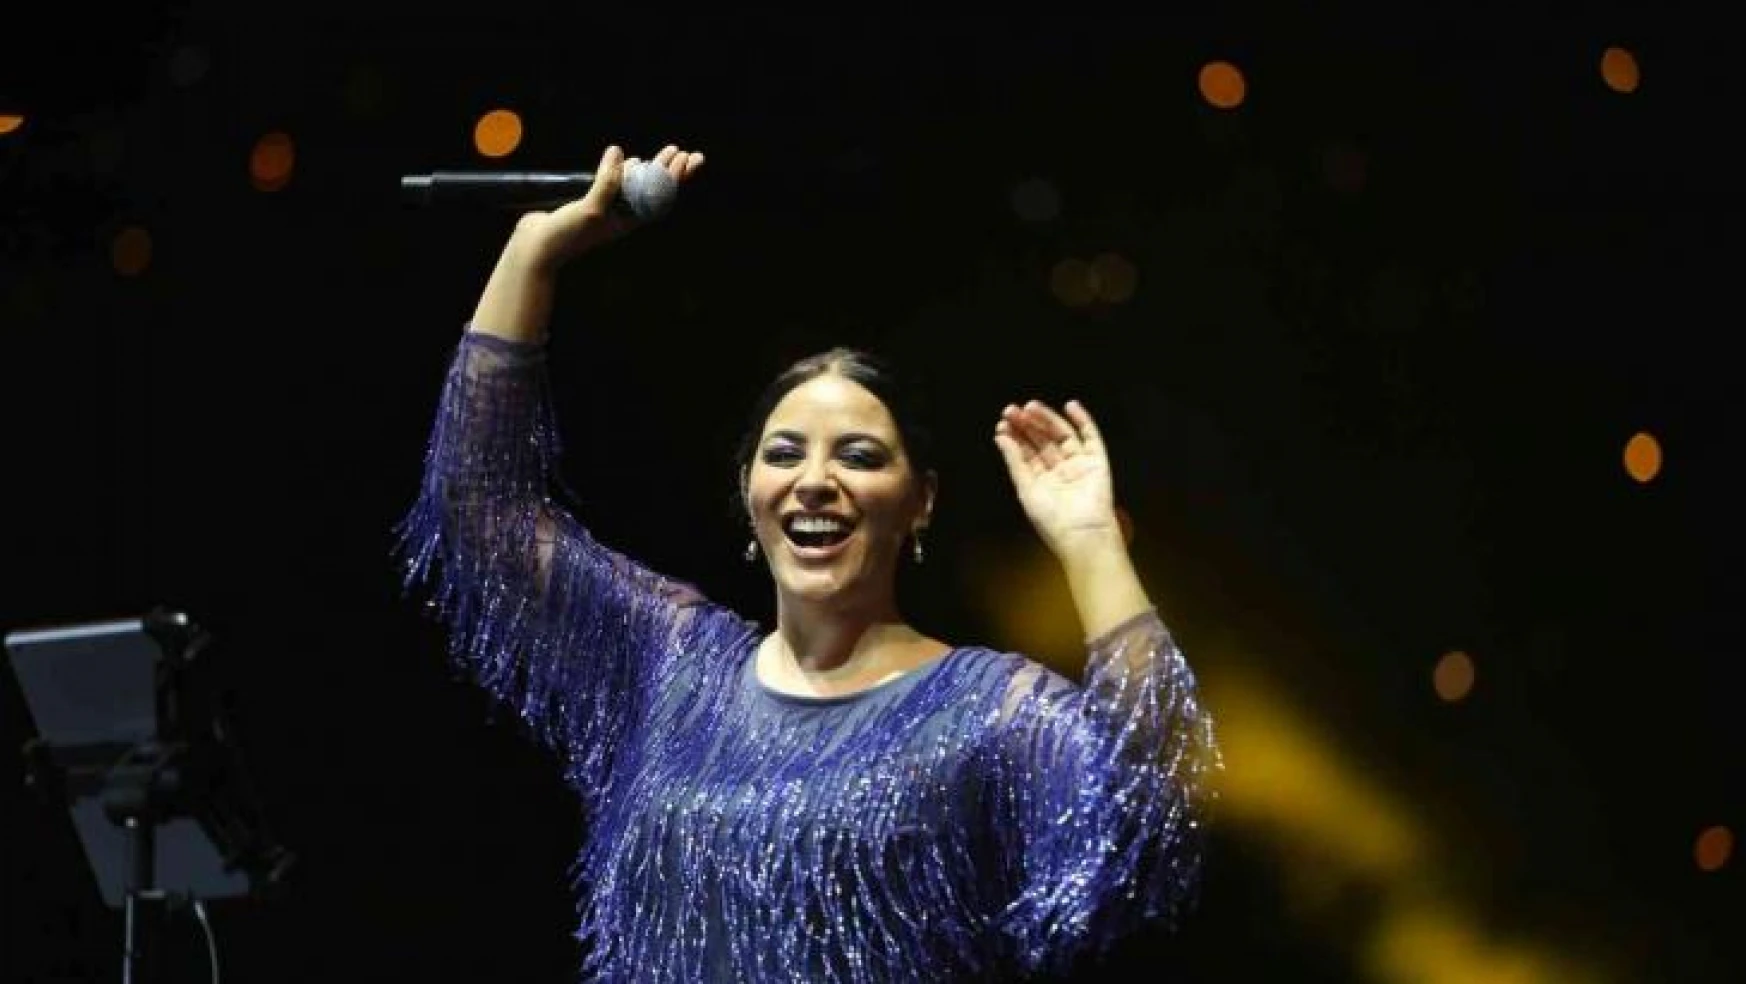 Zara, 30 Ağustos Zafer Bayramı'nda Kaş'ta konser verdi